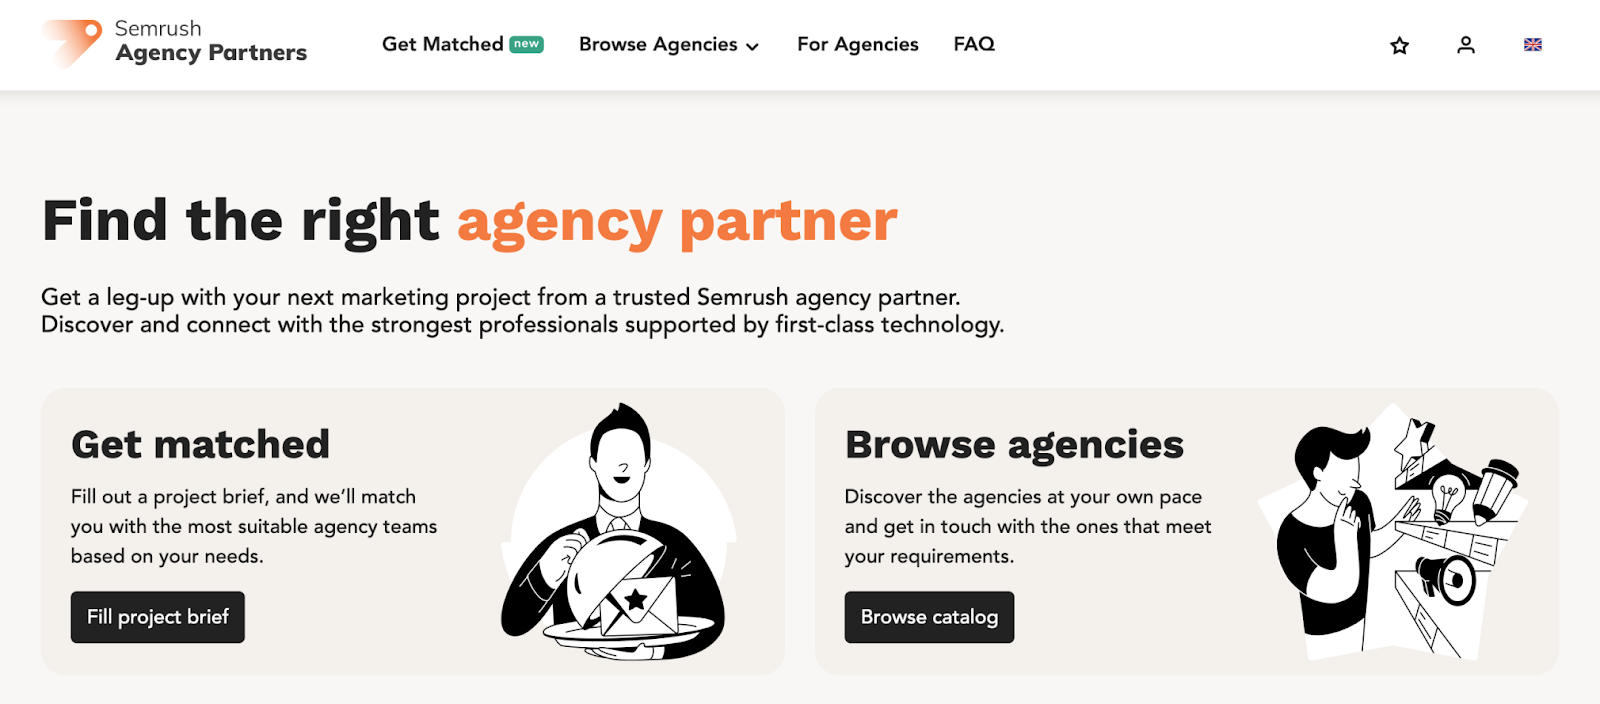 Semrush’s Agency Partners directory